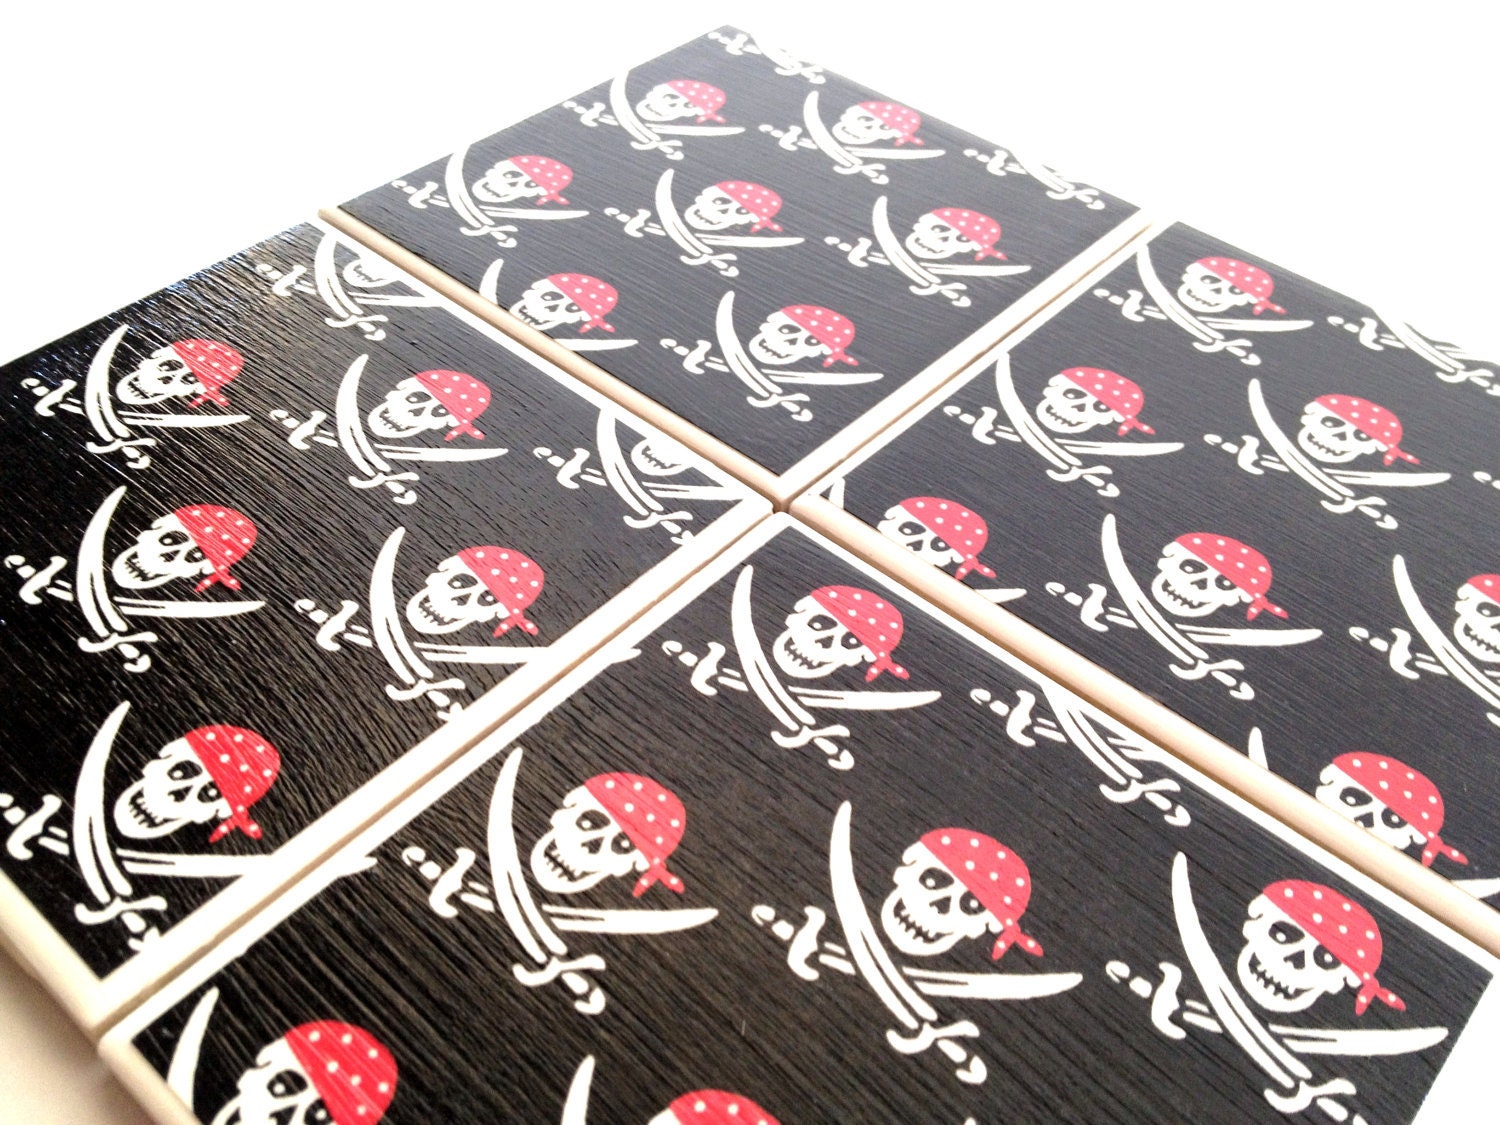 Black Pirate Coasters Swords Skull Men Ceramic Tile Drink - QueenOfDeTile